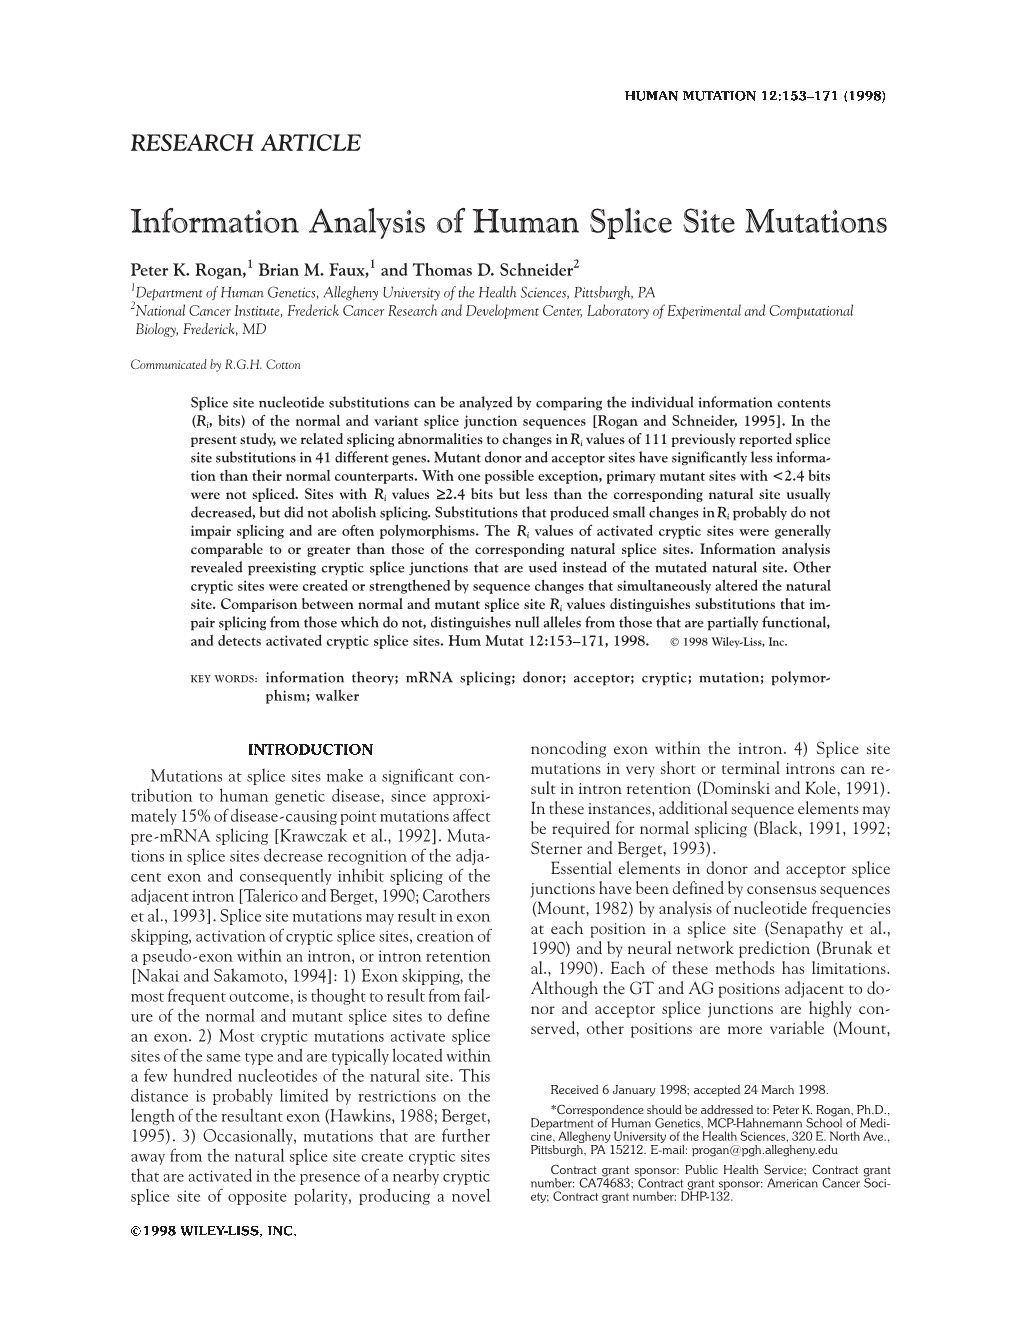 Information Analysis of Human Splice Site Mutations